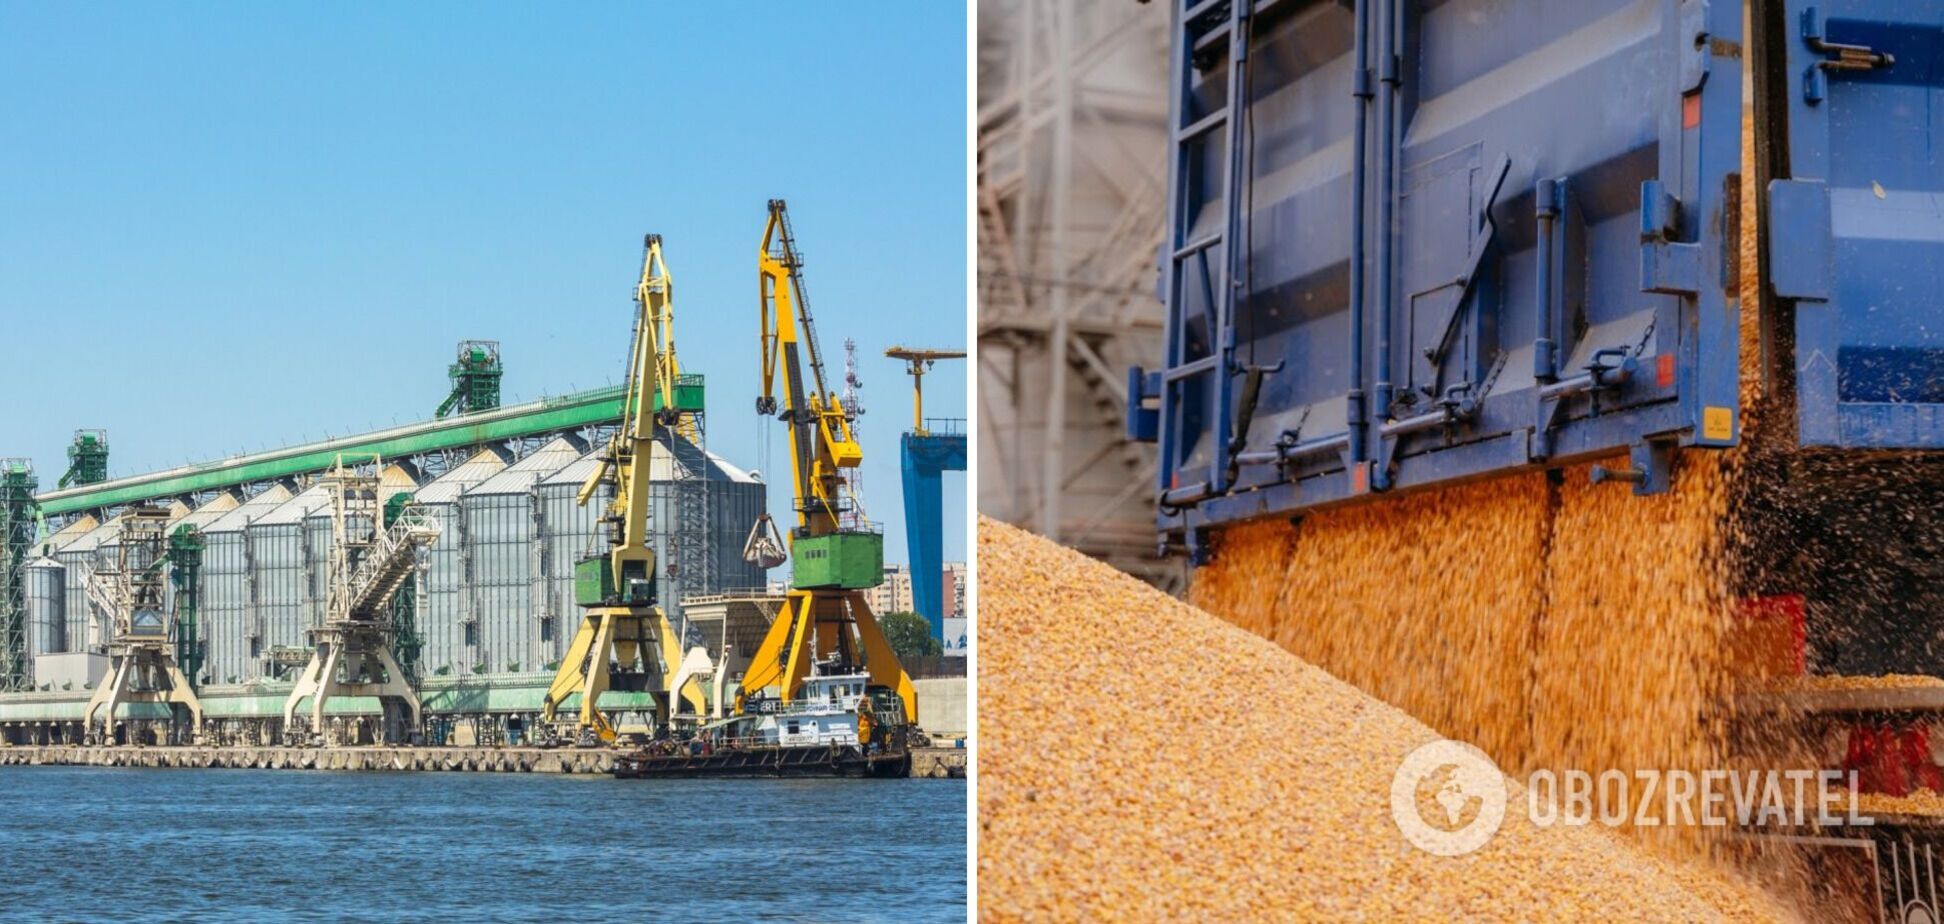 Україна тепер експортує кукурудзу через порт Констанца